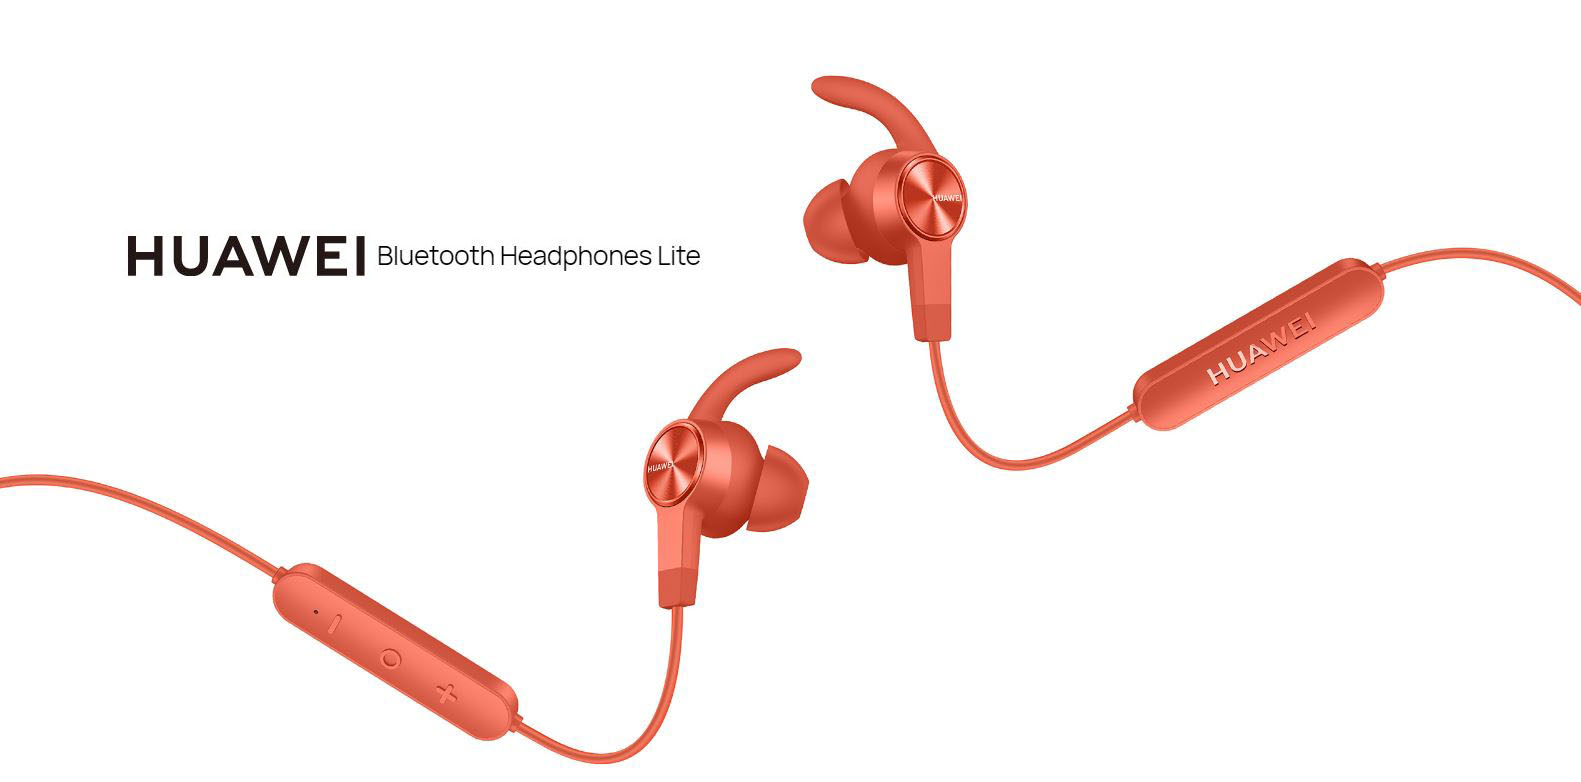 HUAWEI Bluetooth Headphones Lite